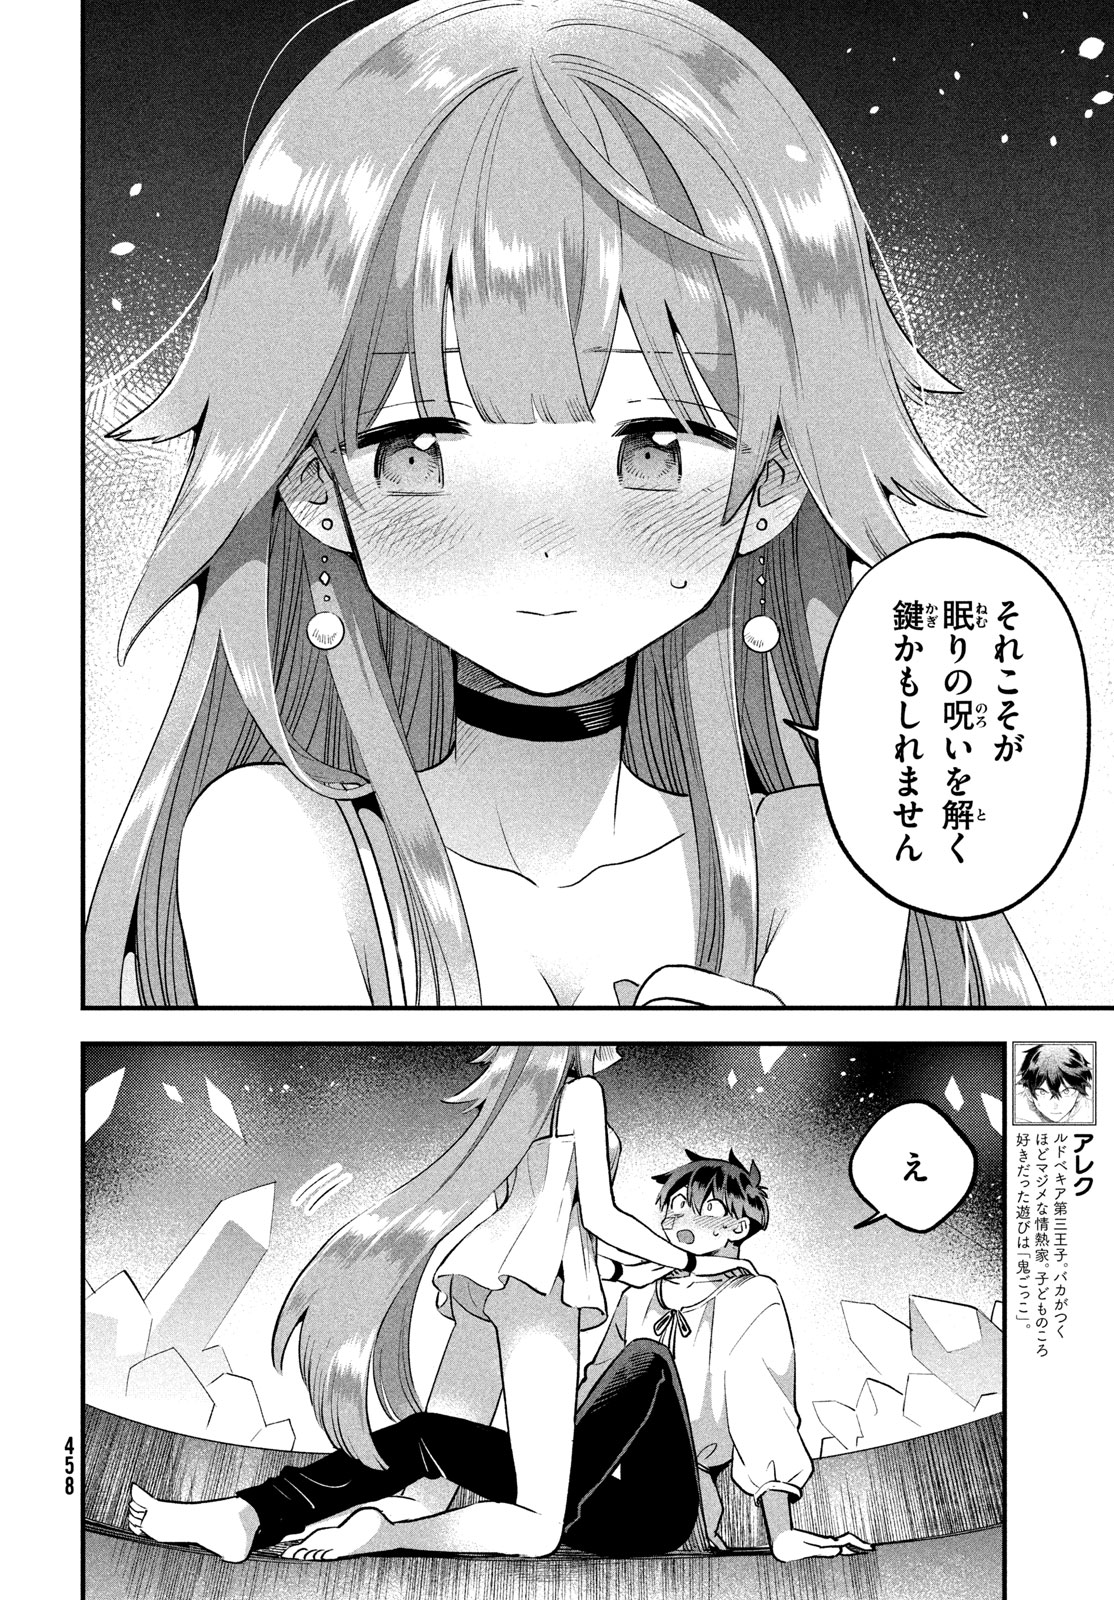 7-nin no Nemuri Hime - Chapter 51 - Page 2